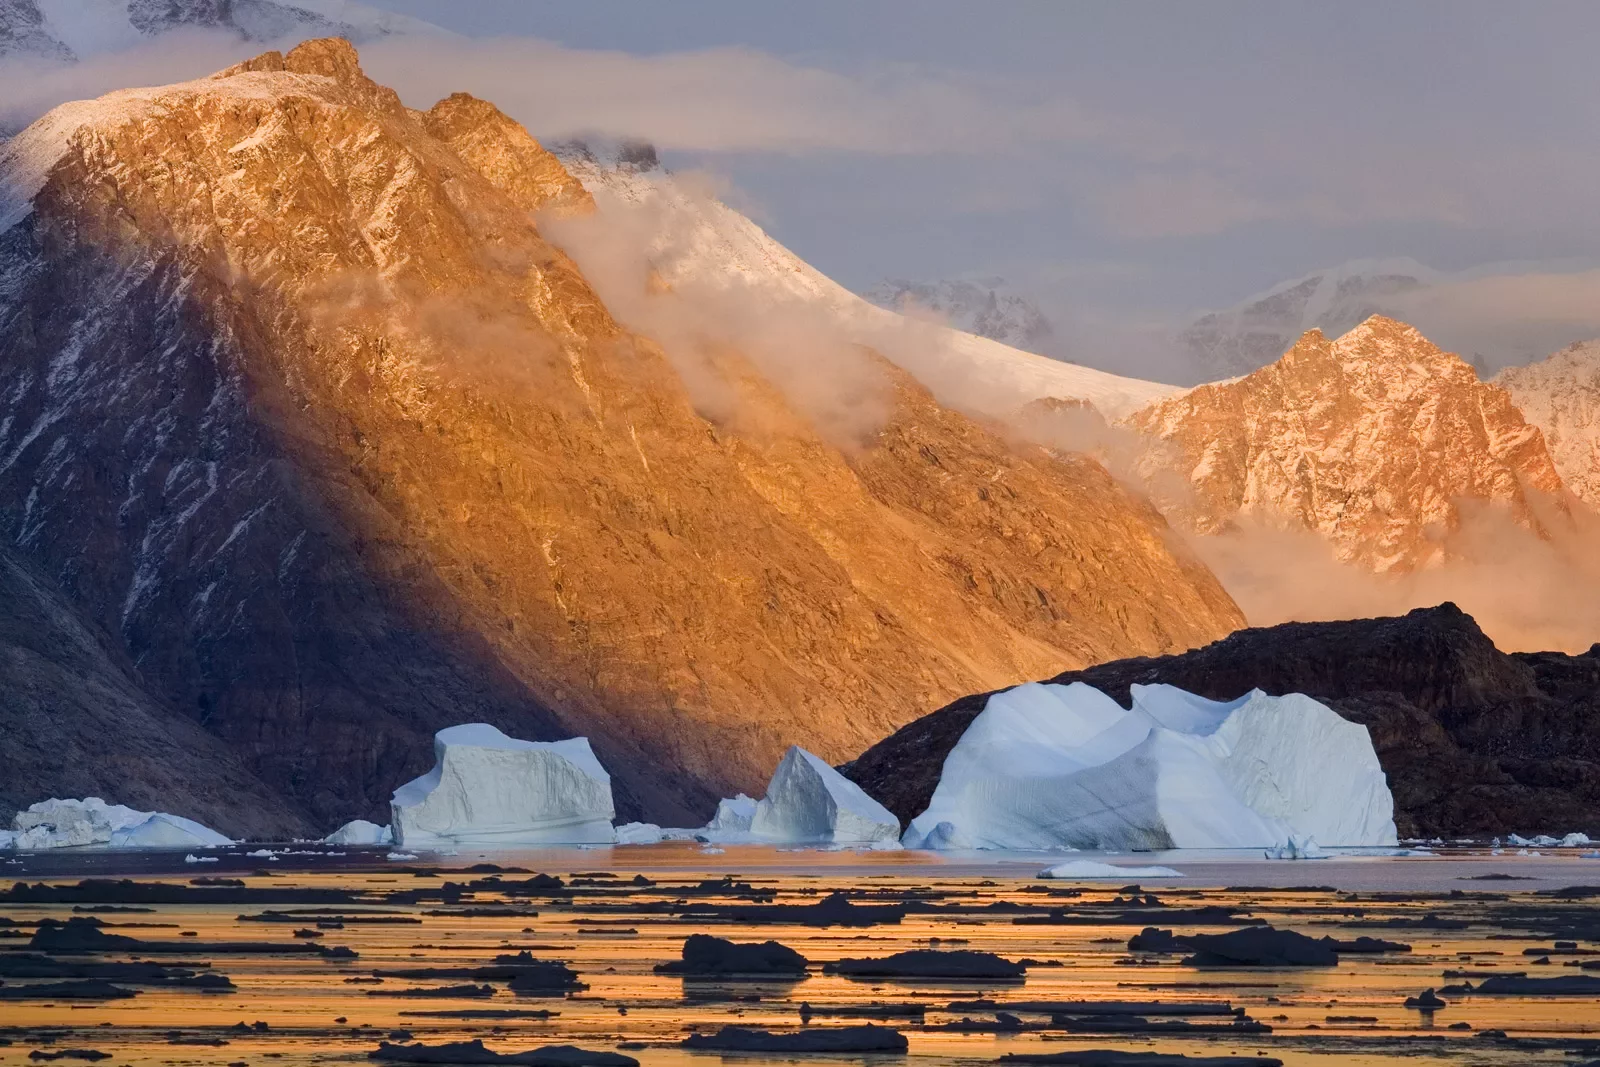 Orange mountains with icebergs